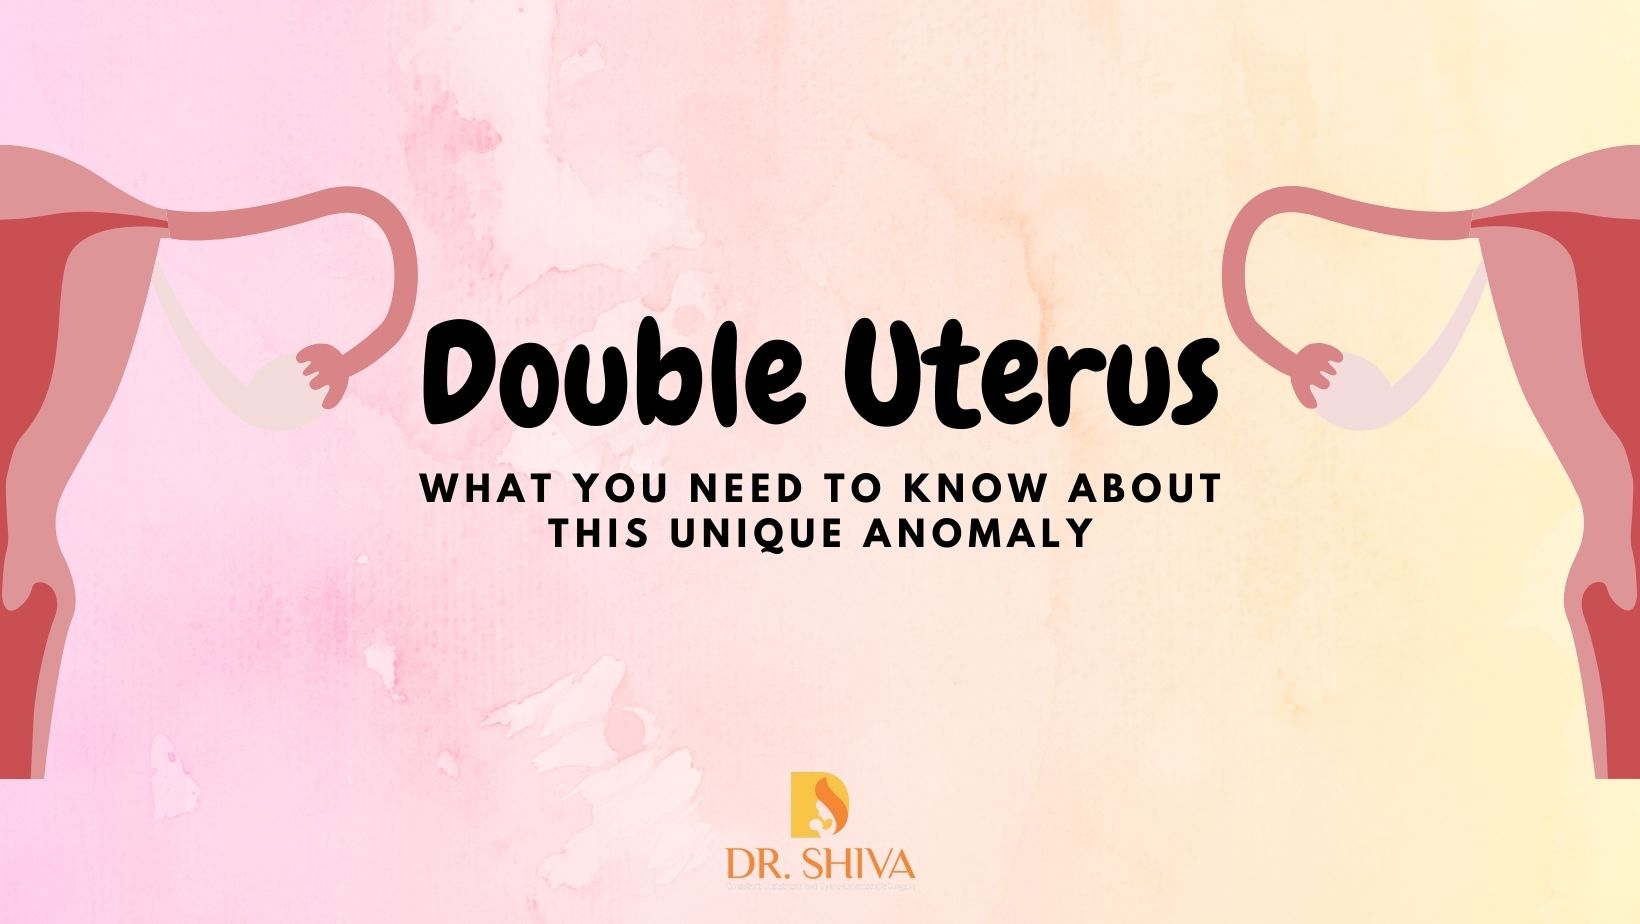 Double Uterus or Uterus Didelphys